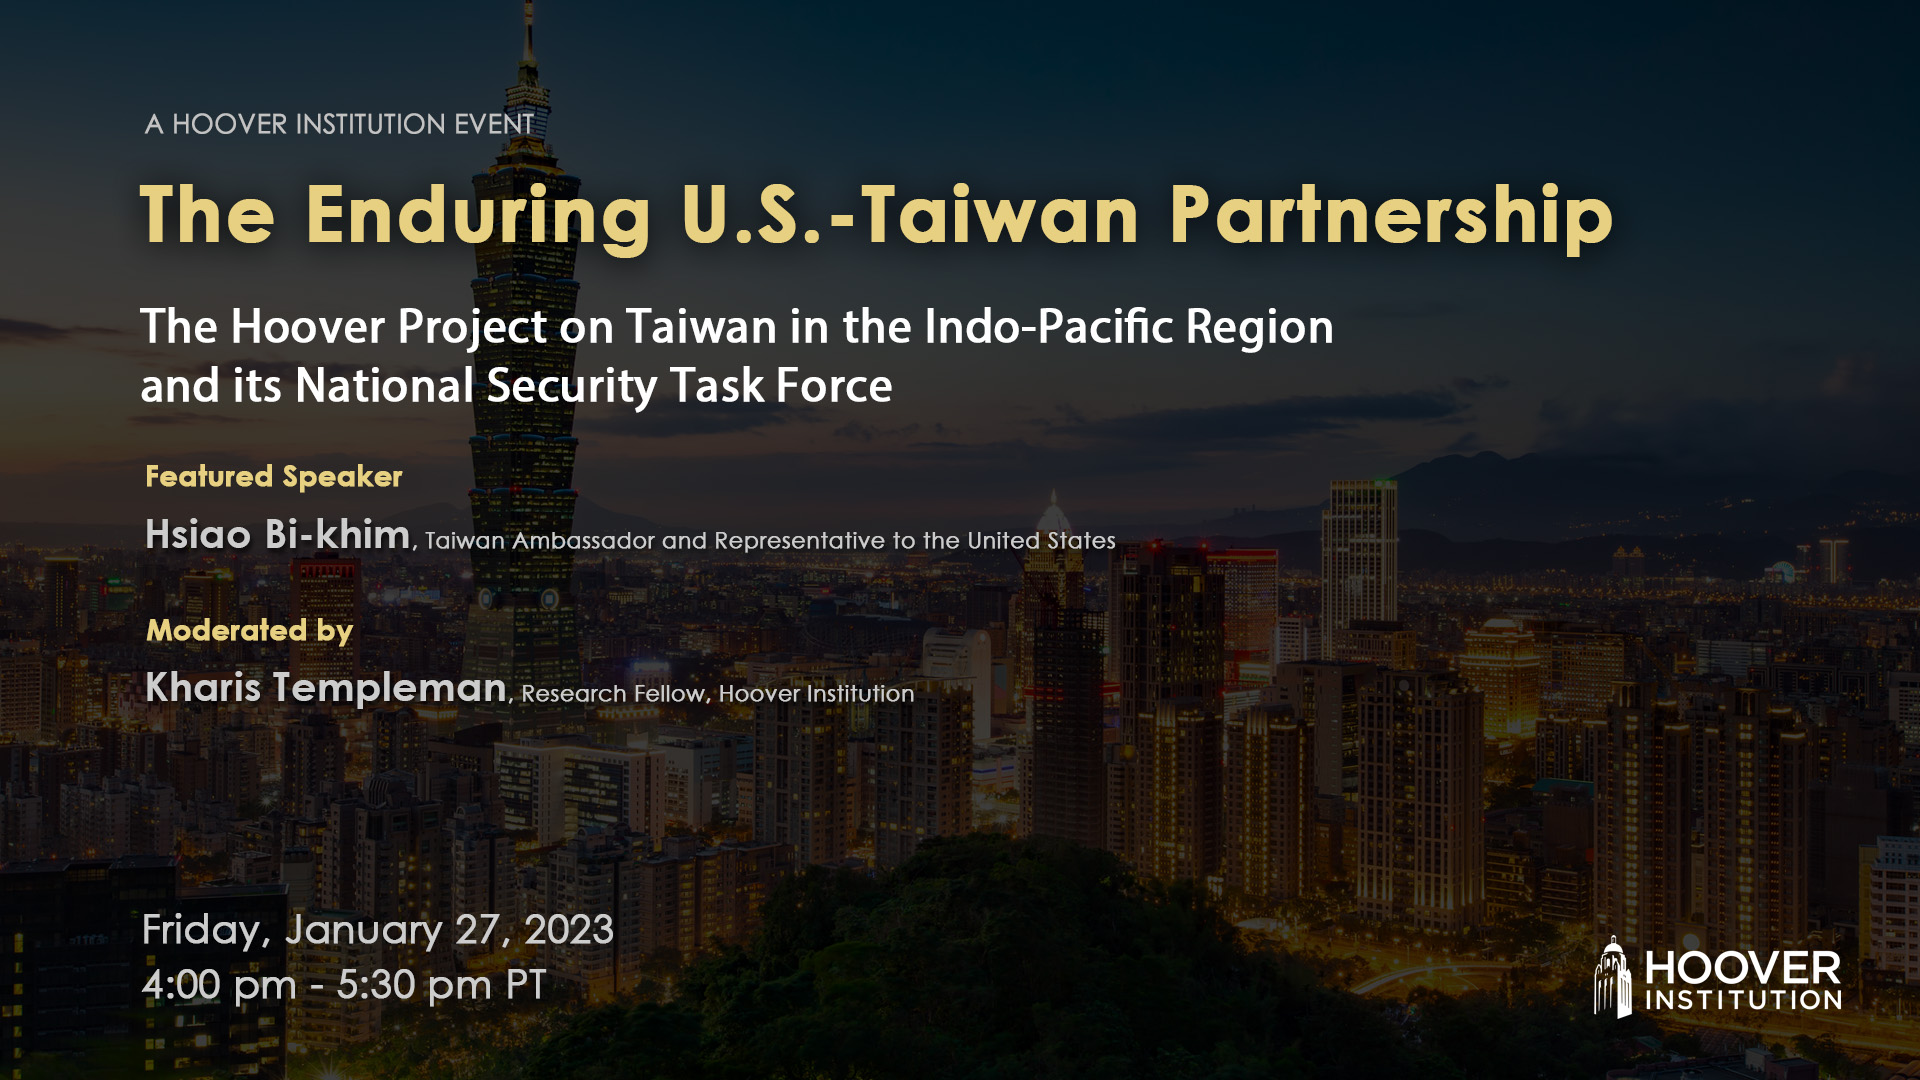 The Enduring U.S. - Taiwan Partnership